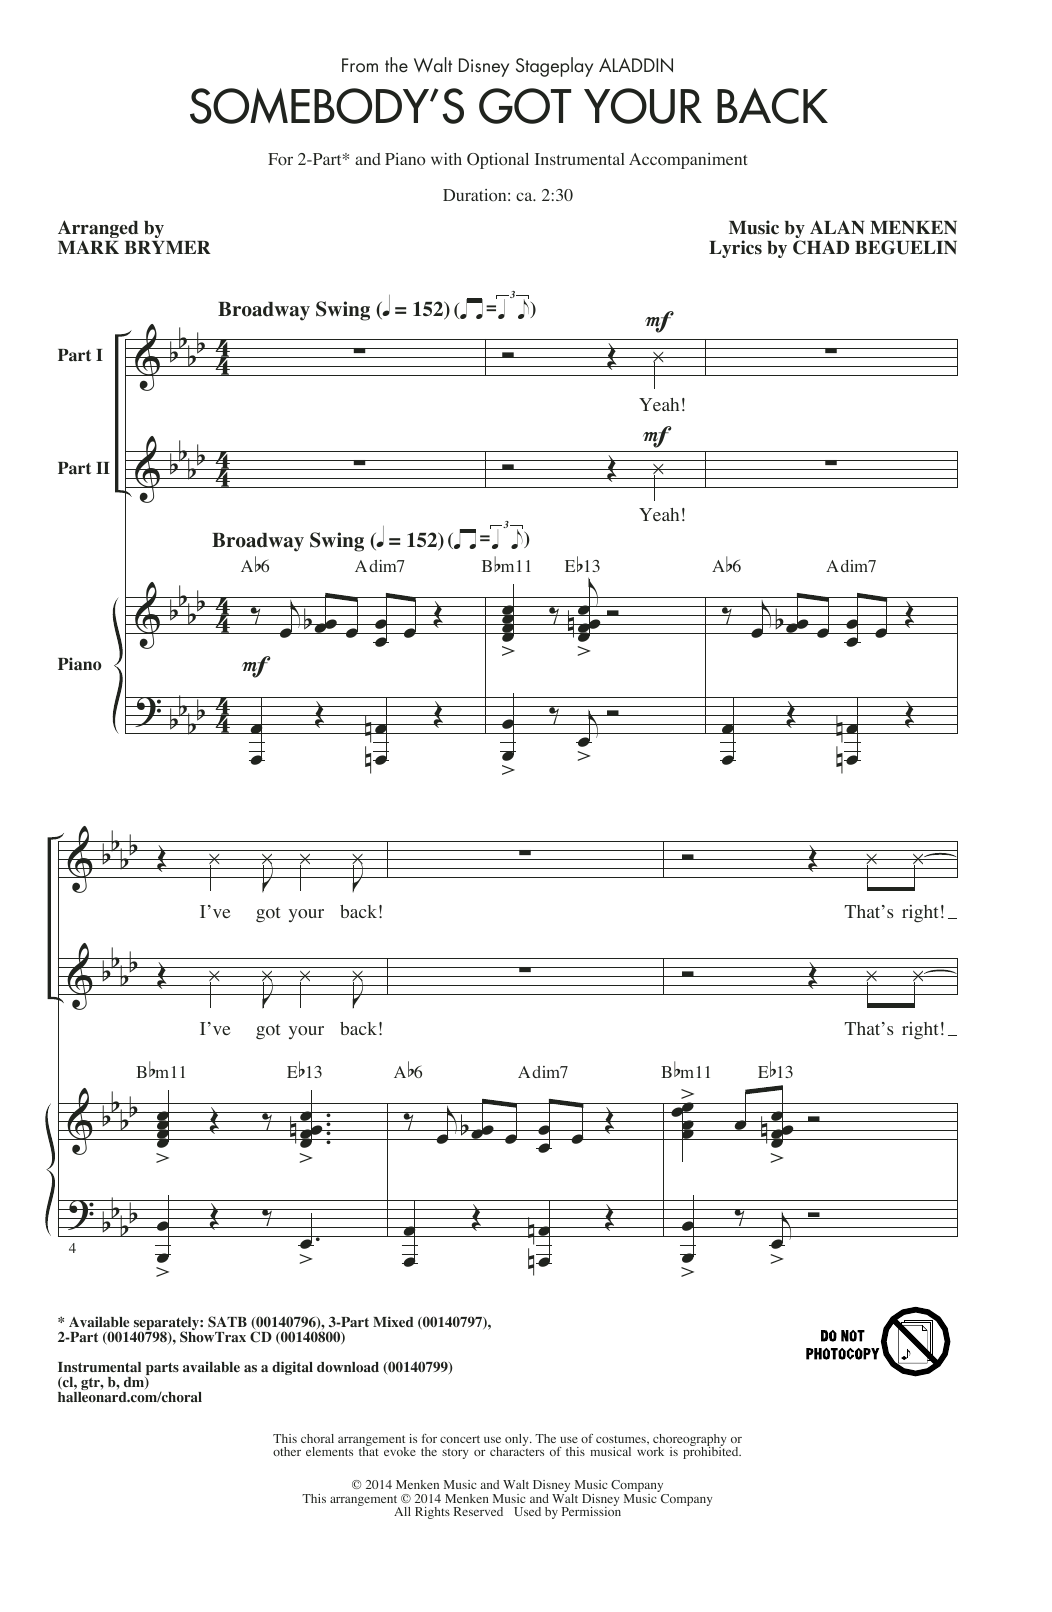 Alan Menken Somebody's Got Your Back (arr. Mark Brymer) Sheet Music Notes & Chords for 2-Part Choir - Download or Print PDF